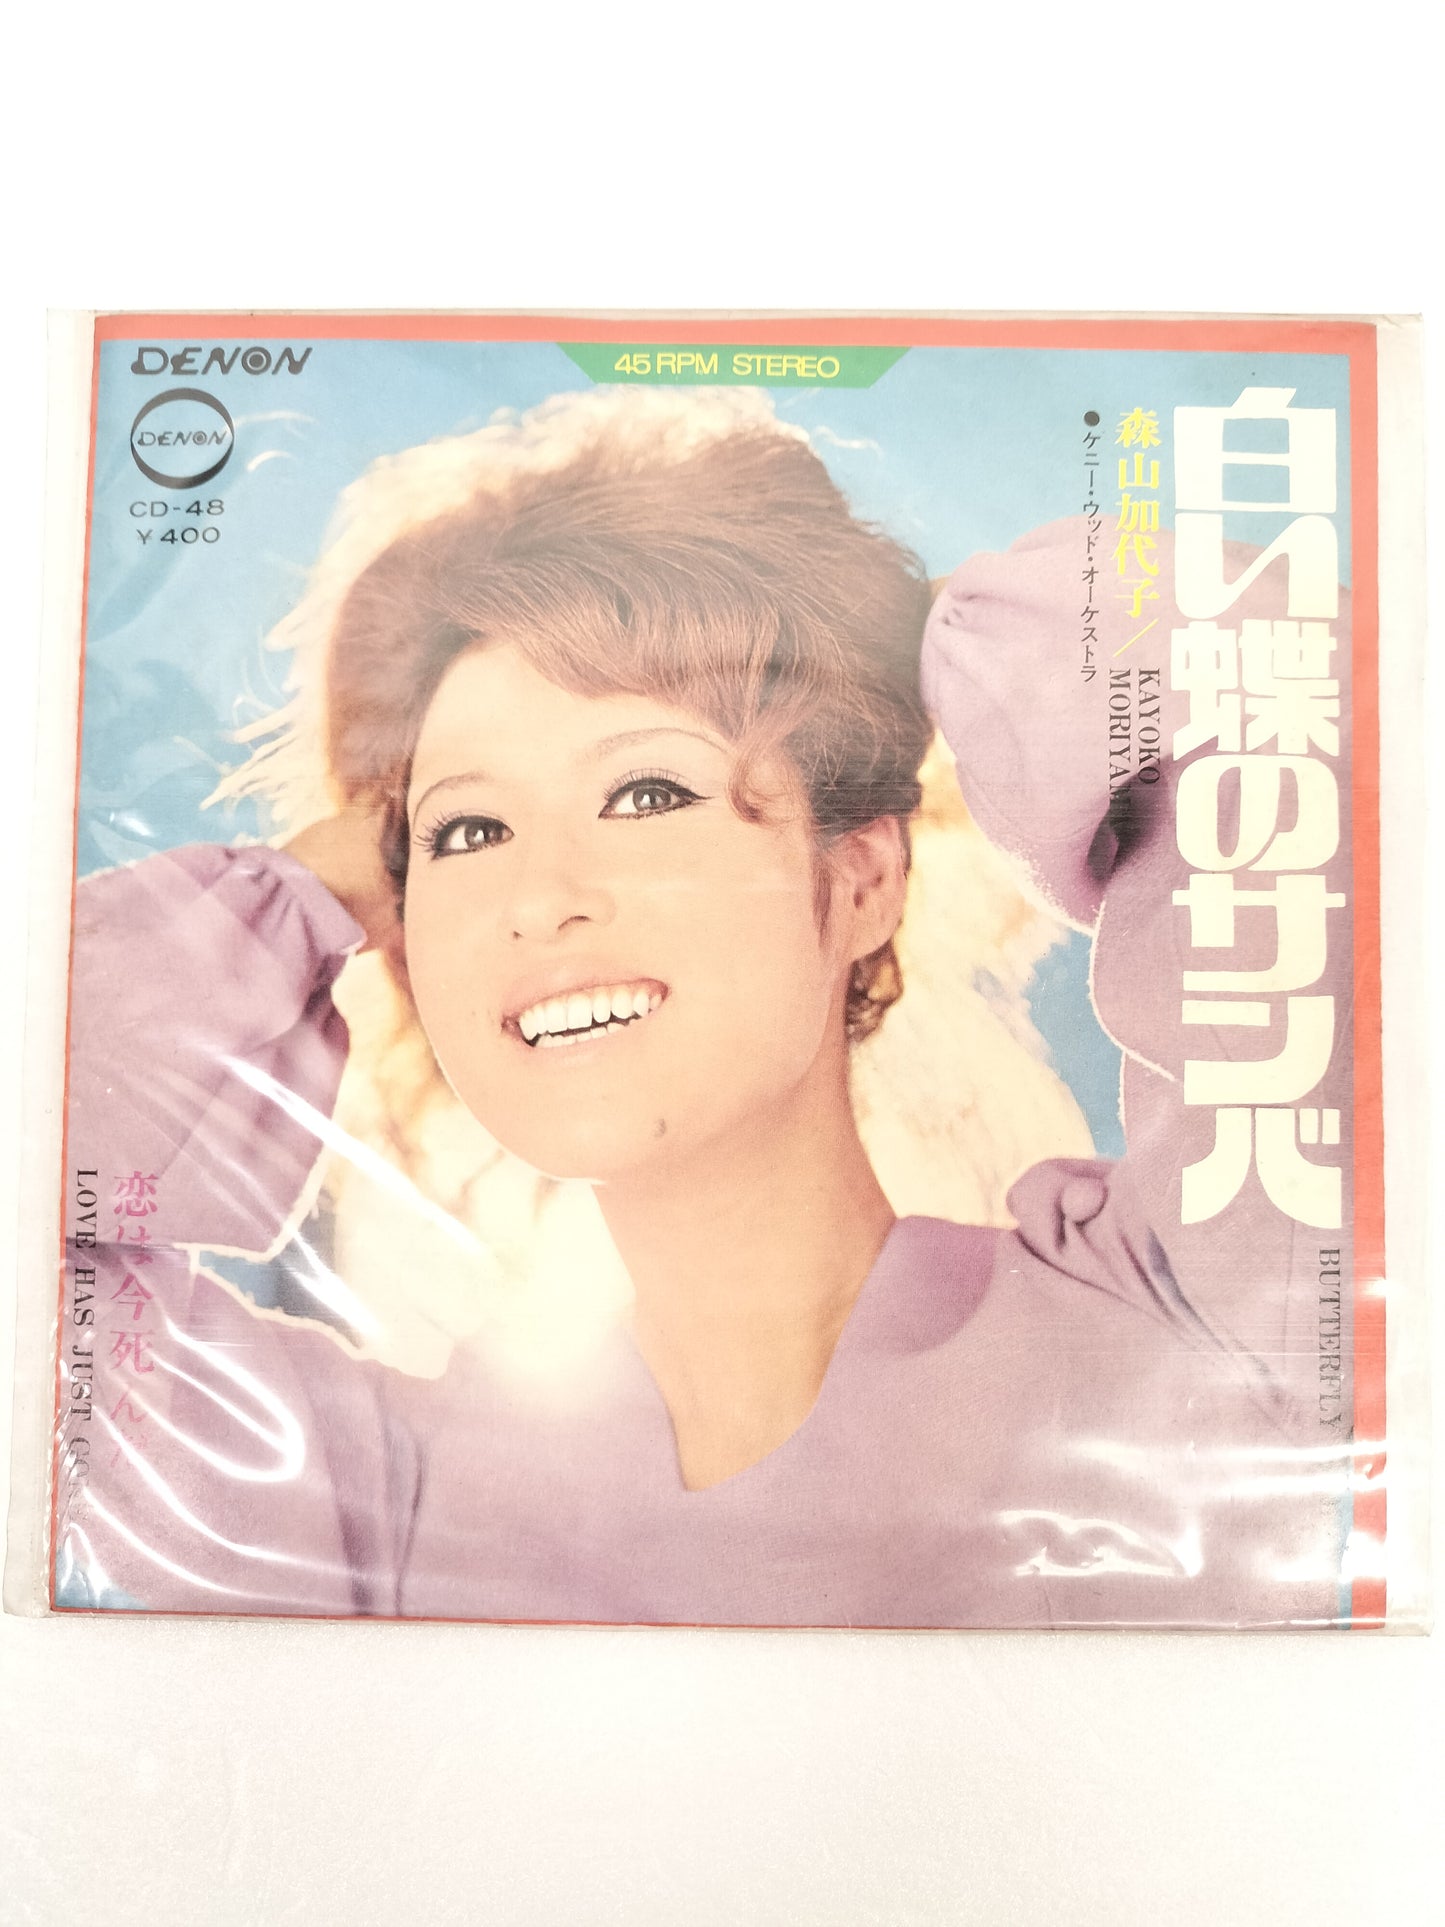 1970 White Butterfly Samba Kayoko Moriyama B: Love is now dead Japanese record vintage